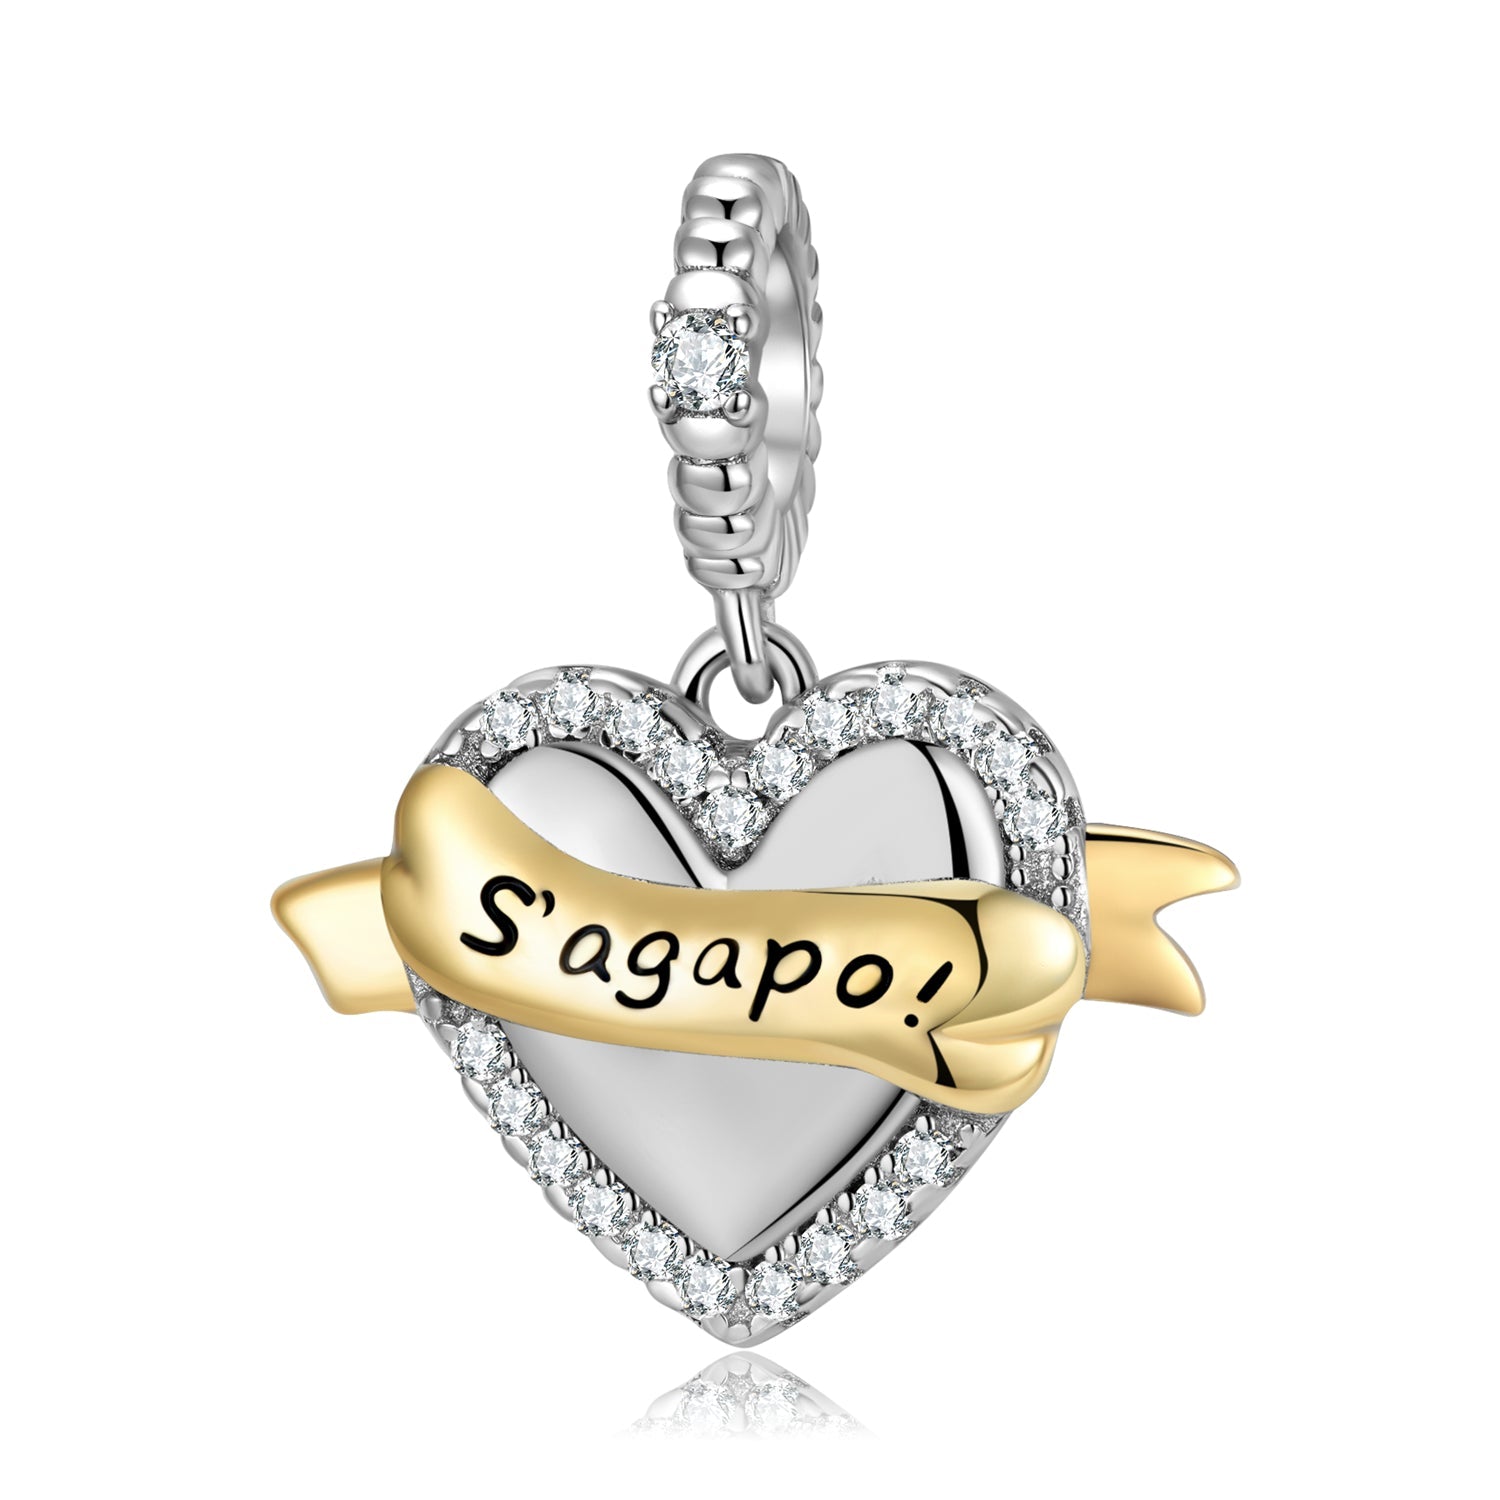 Heart with gems "S'agapo!"